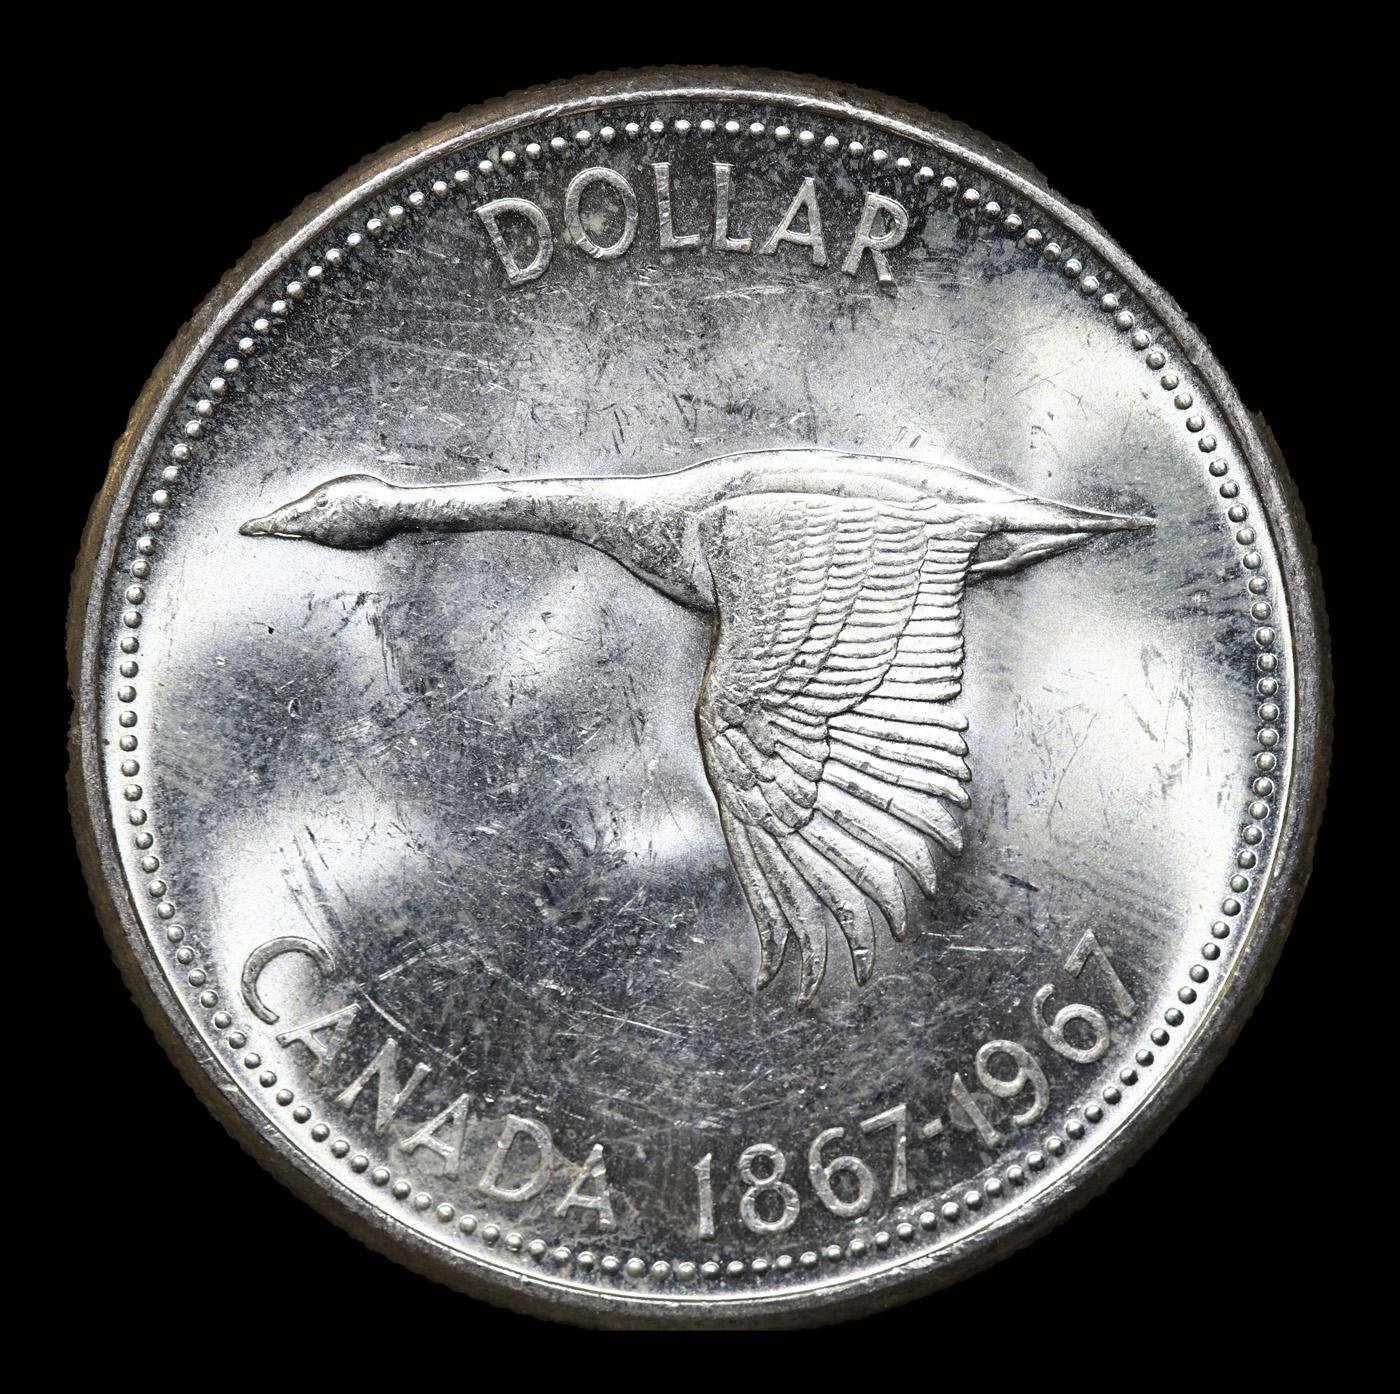 1967 Canada Dollar Cameo! 1 Grades Choice Unc+ PL